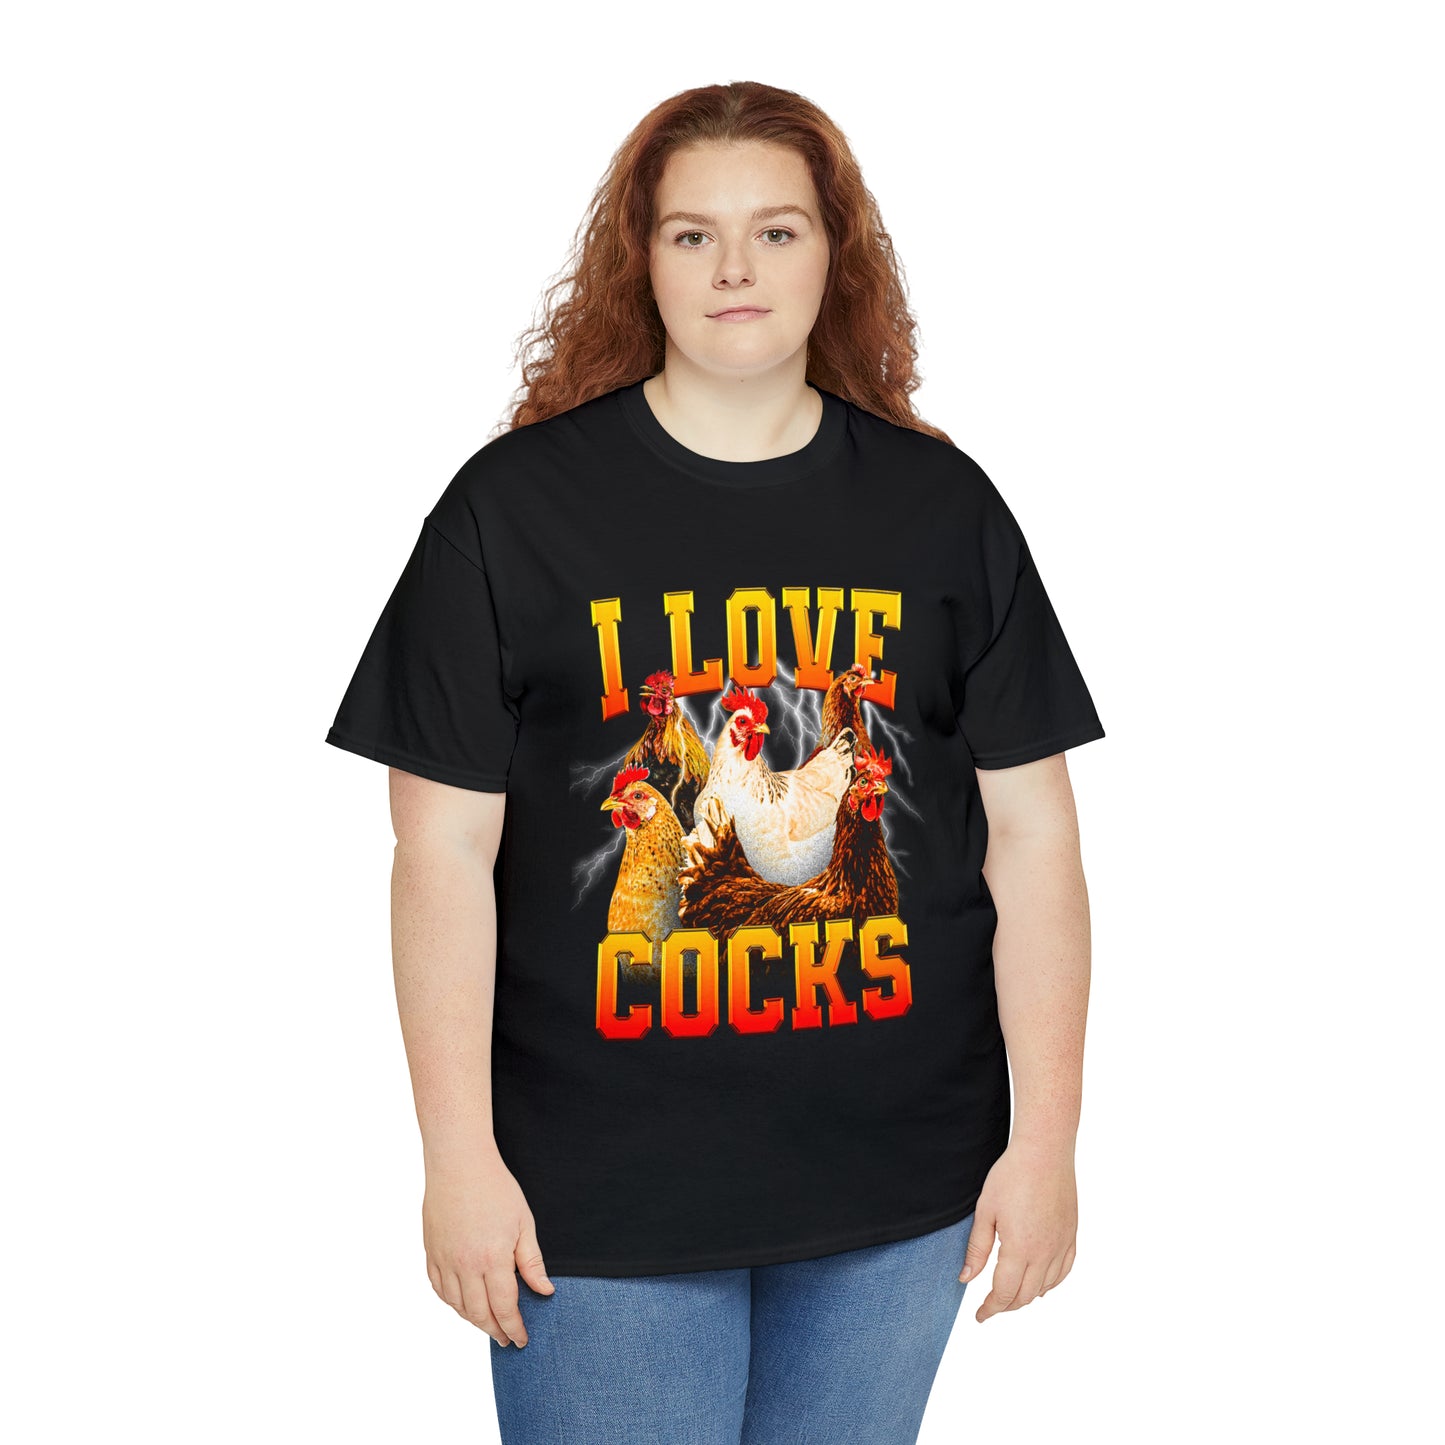 I Love Cocks!